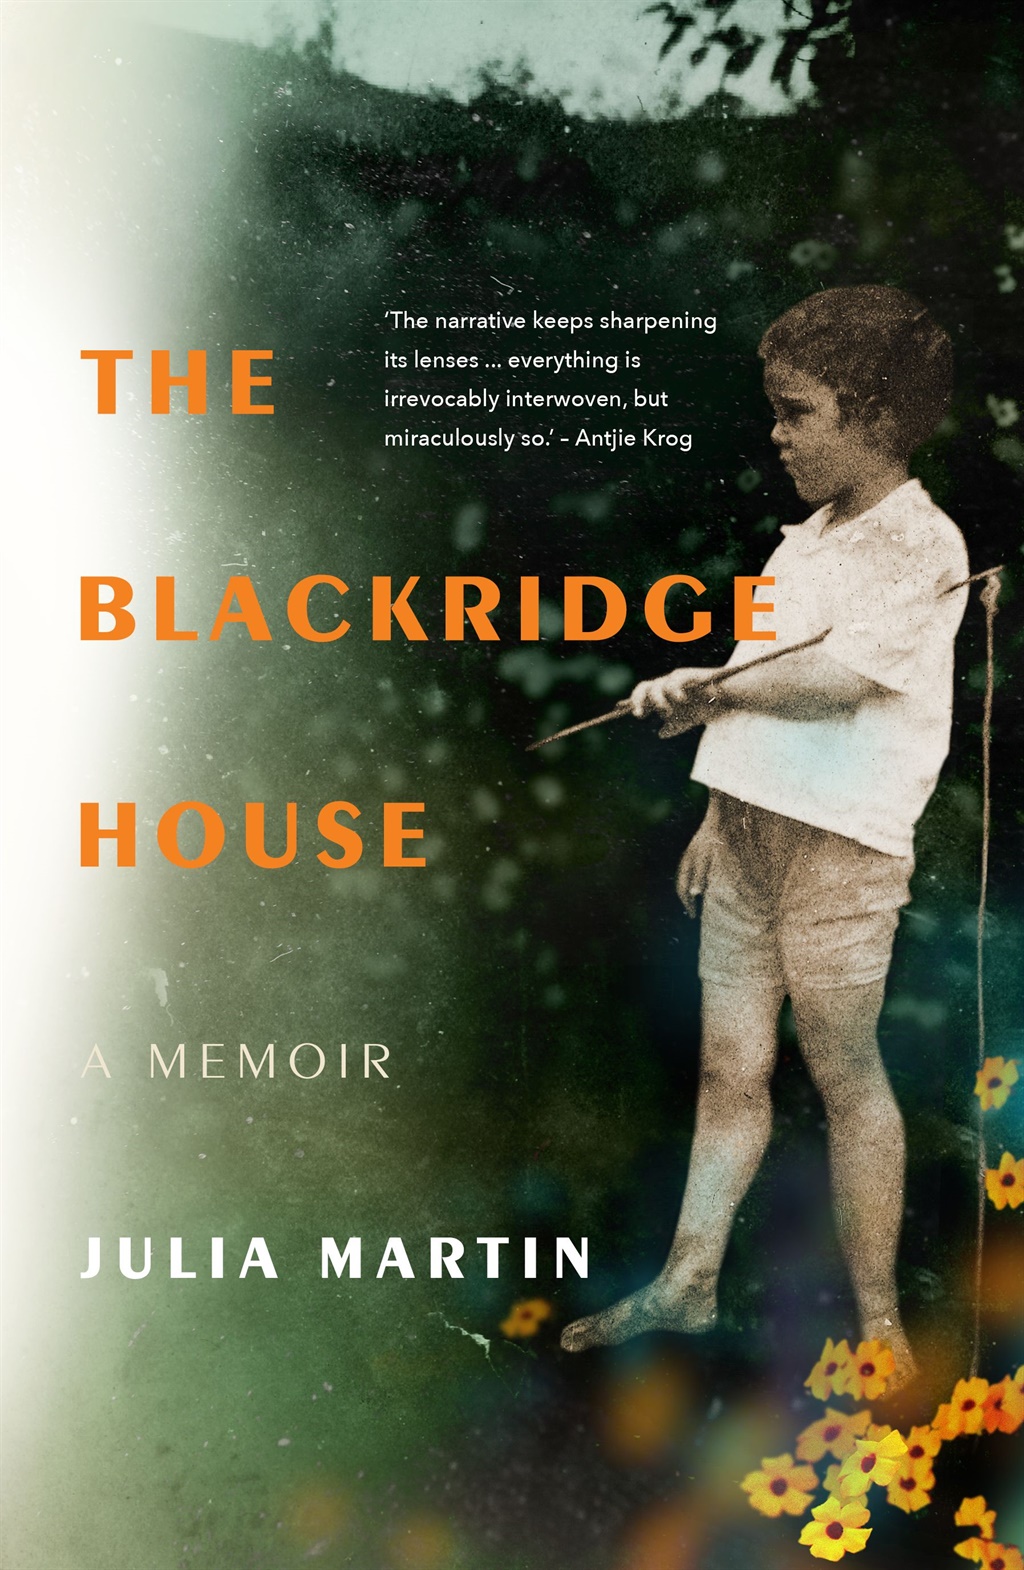 The Blackridge House by Julia Martin, published by Jonathan Ball Publishers.